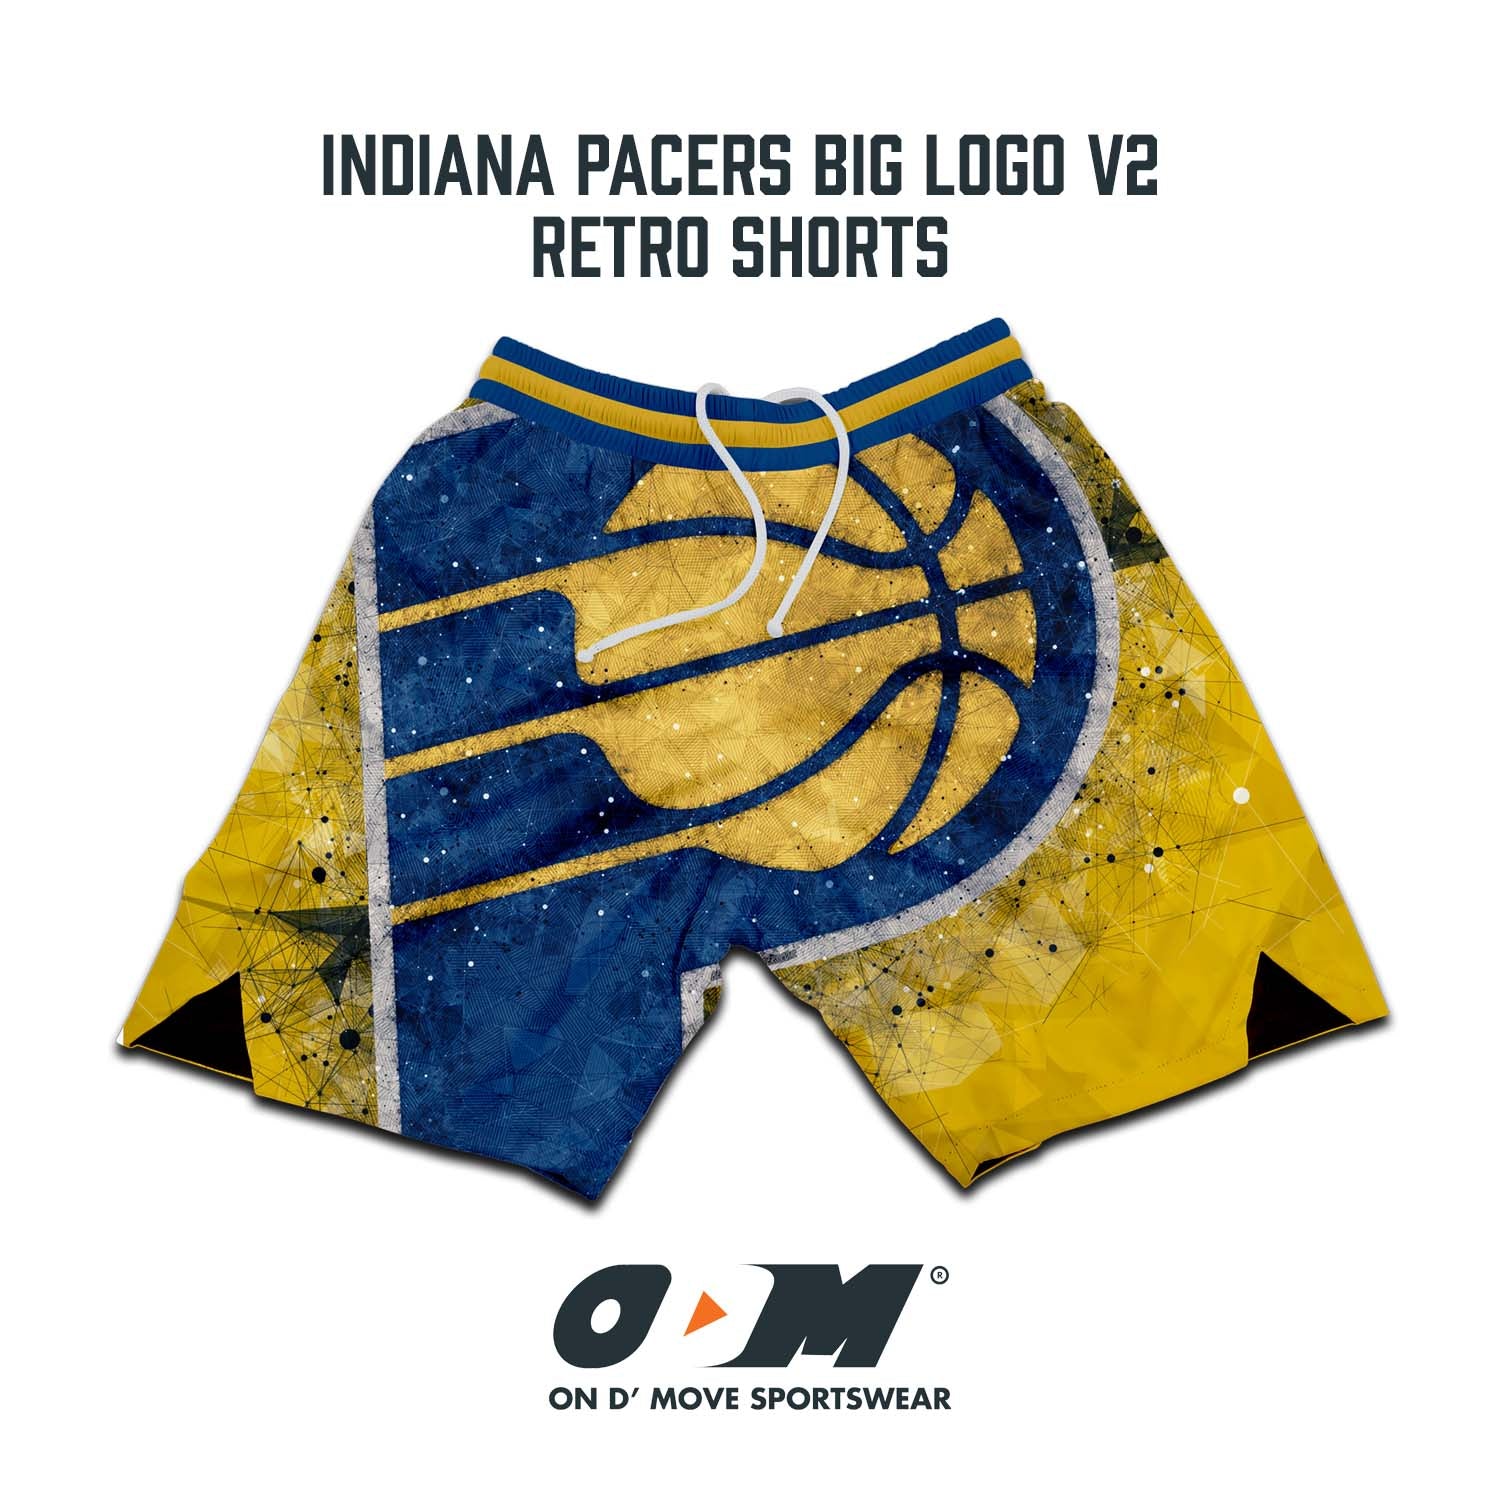 Indiana Pacers Big Logo v2 Retro Shorts